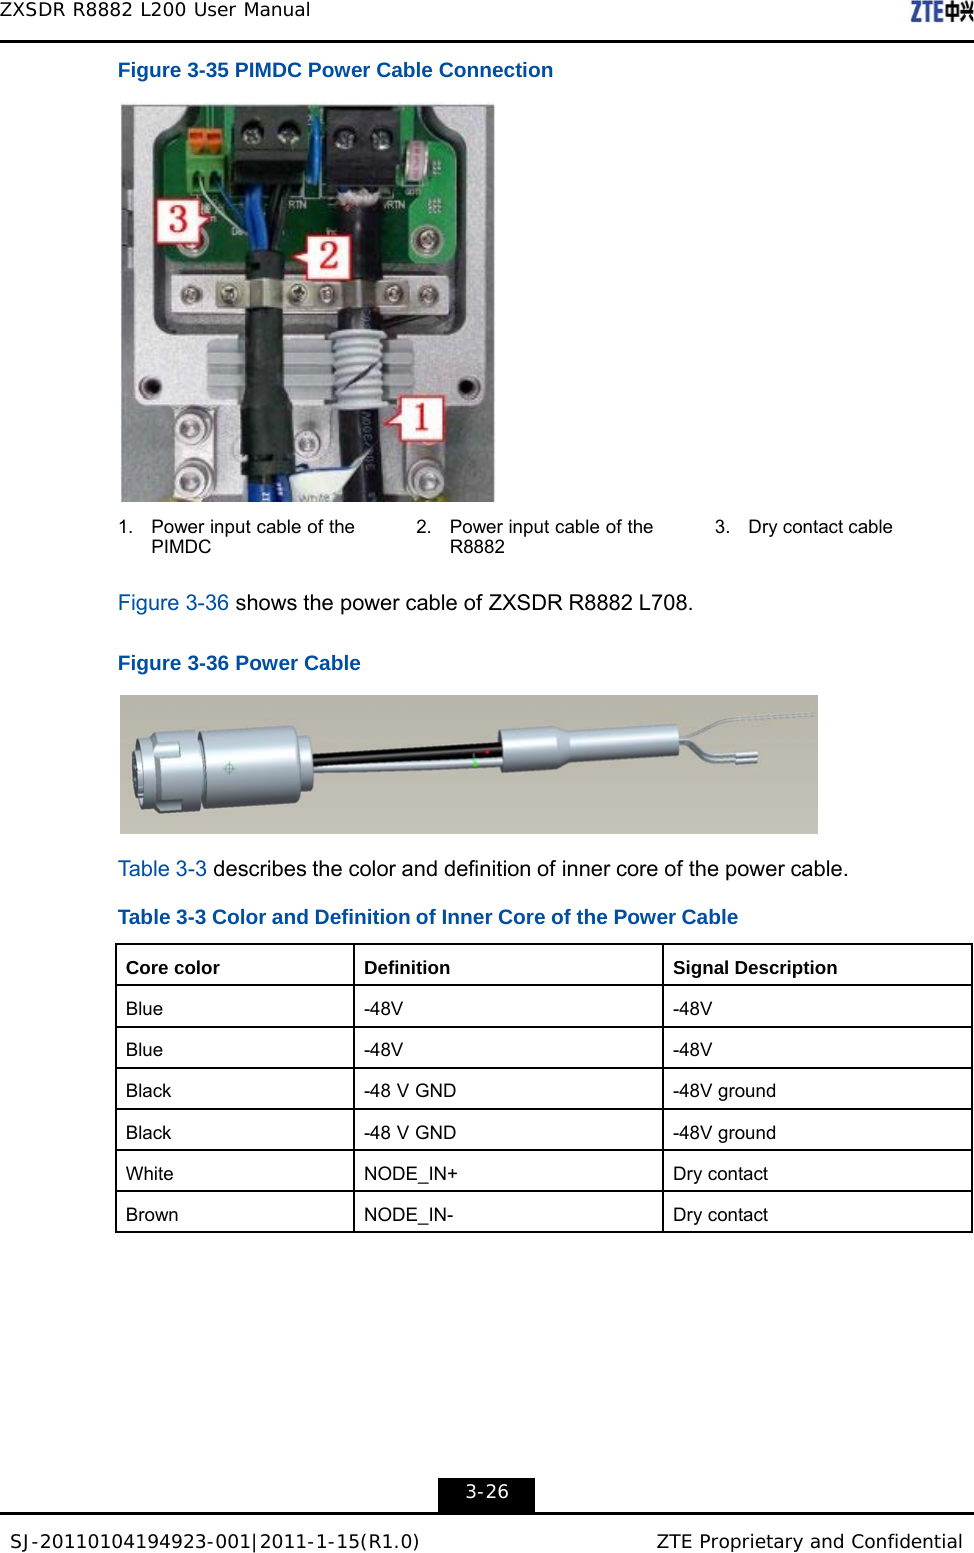 SJ-20110104194923-001|2011-1-15(R1.0) ZTE Proprietary and Confidential ZXSDR R8882 L200 User Manual    Figure 3-35 PIMDC Power Cable Connection    1.    Power input cable of the PIMDC 2.    Power input cable of the R8882 3.    Dry contact cable  Figure 3-36 shows the power cable of ZXSDR R8882 L708.   Figure 3-36 Power Cable    Table 3-3 describes the color and definition of inner core of the power cable.  Table 3-3 Color and Definition of Inner Core of the Power Cable   Core color  Definition Signal Description  Blue  -48V -48V  Blue  -48V -48V  Black  -48 V GND -48V ground  Black  -48 V GND -48V ground  White  NODE_IN+ Dry contact  Brown  NODE_IN- Dry contact             3-26 